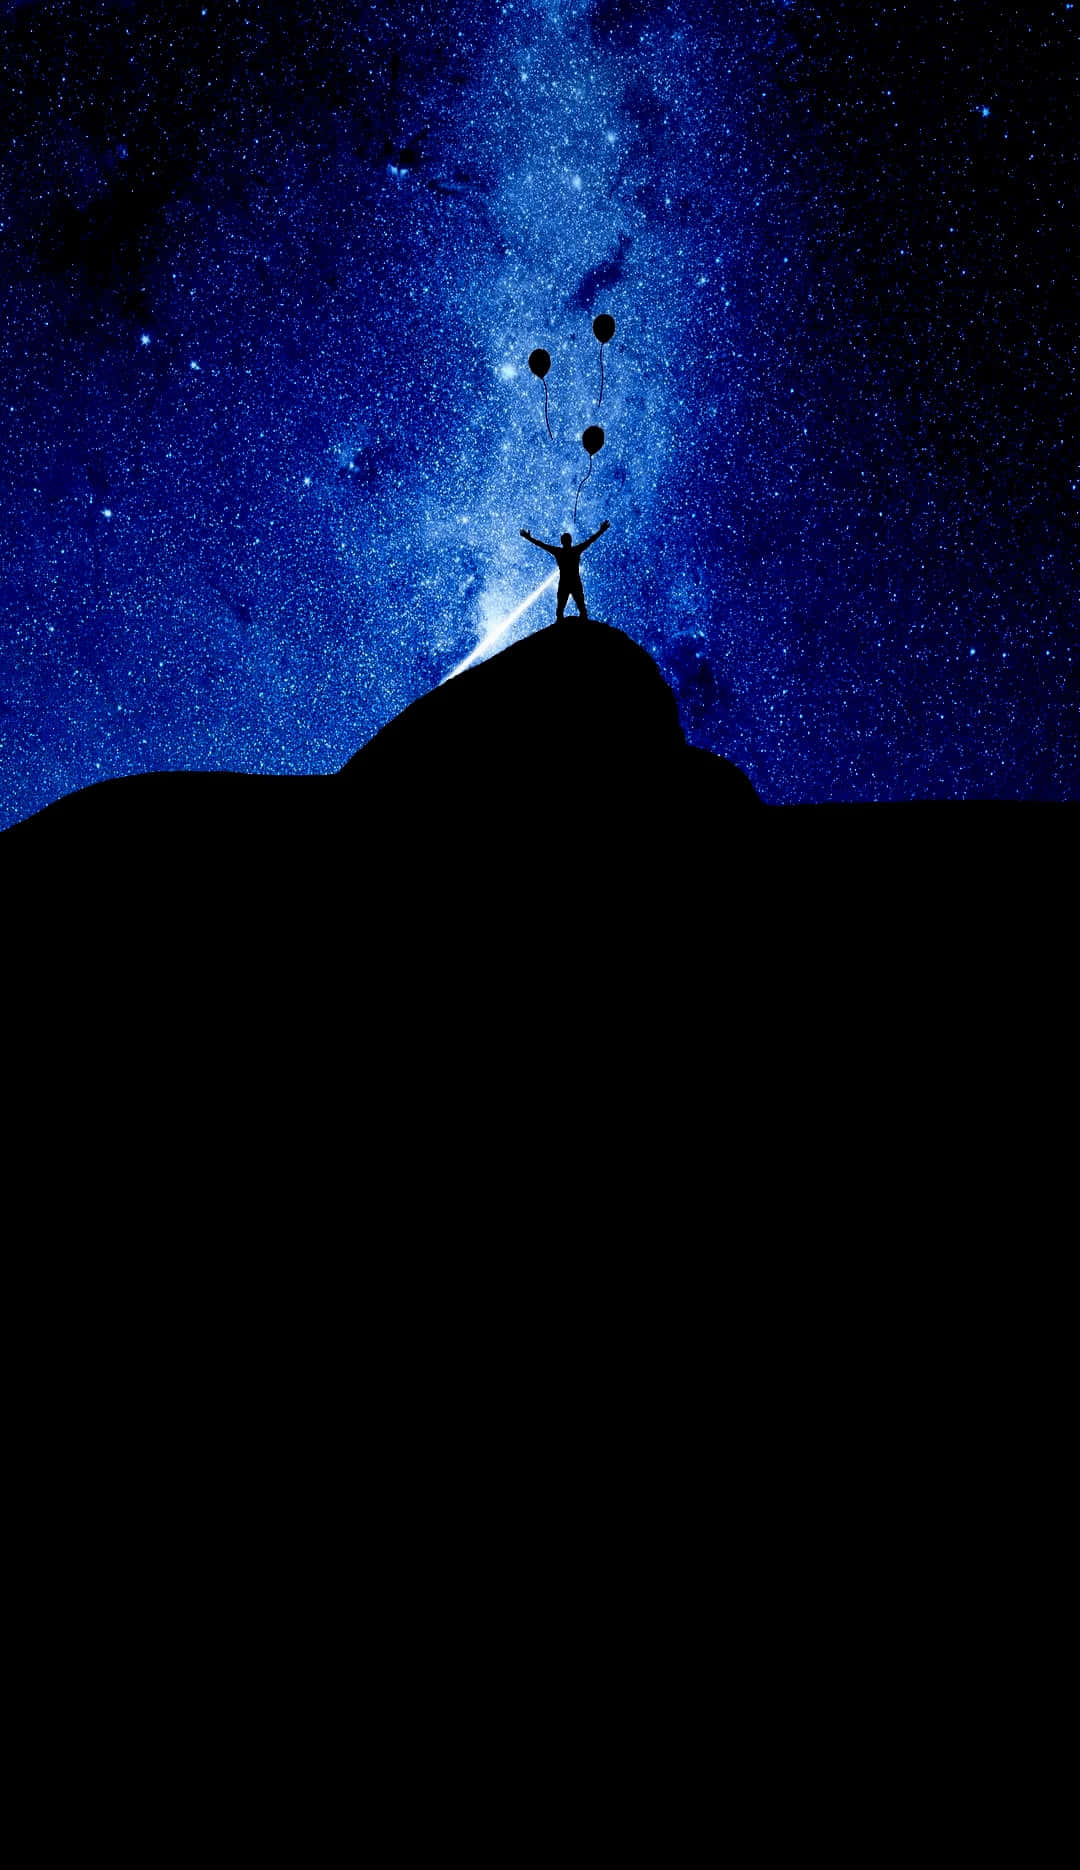 Stellar Night Sky: A Fascinating Amoled Show